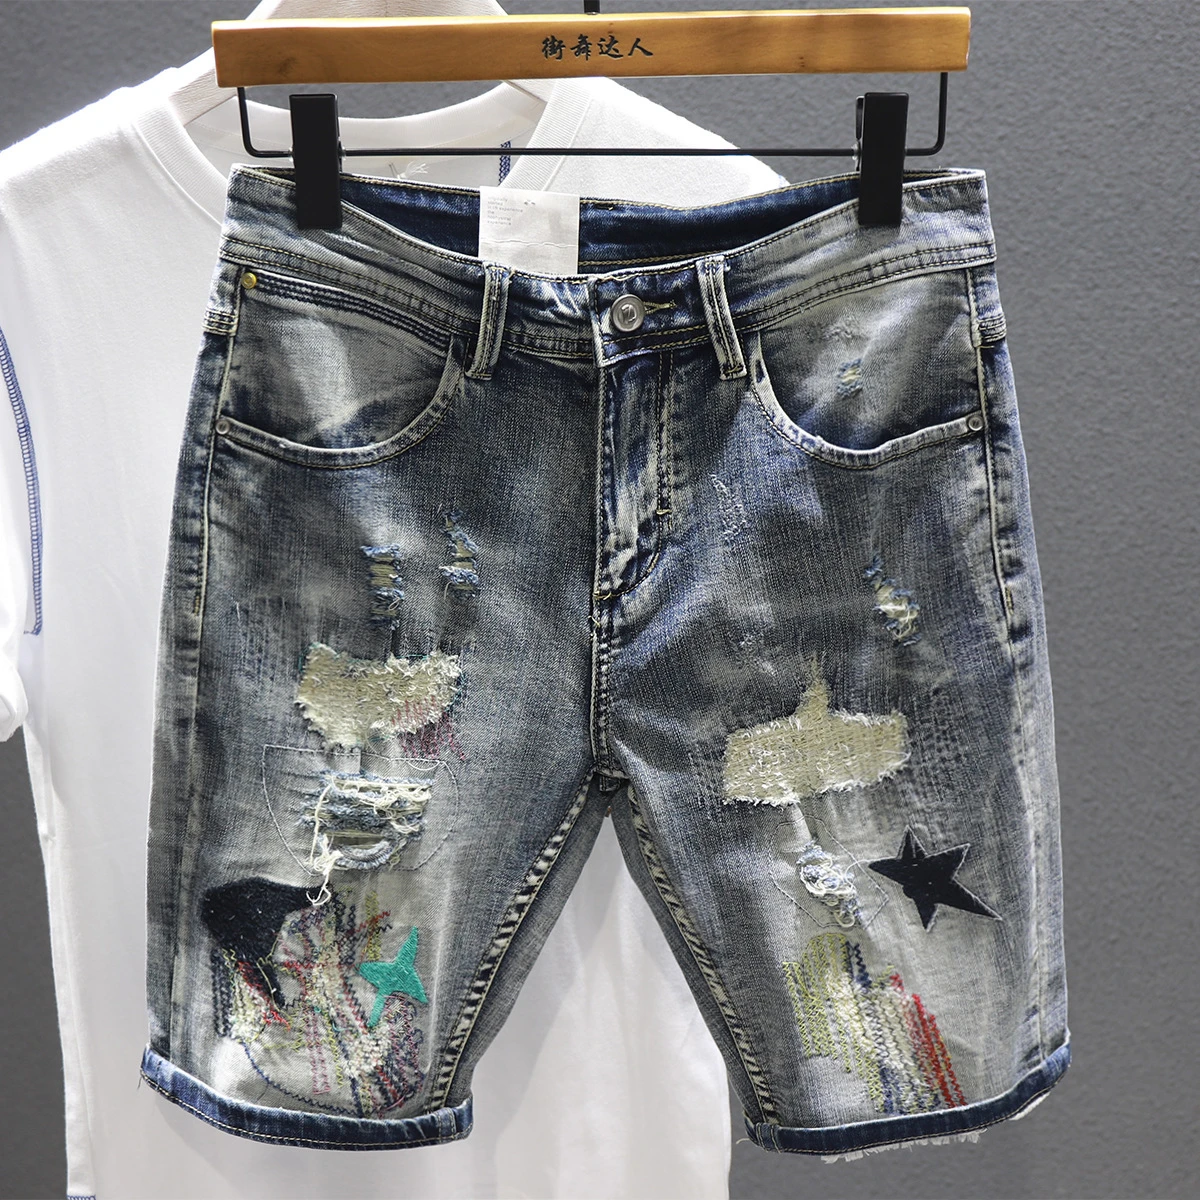 jeans pant Fashion 2022 Embroidery Hole Denim Shorts Male Korean Short Pants Student Retro Nostalgic Casual Breeches Ripped Hole Shorts slim jeans